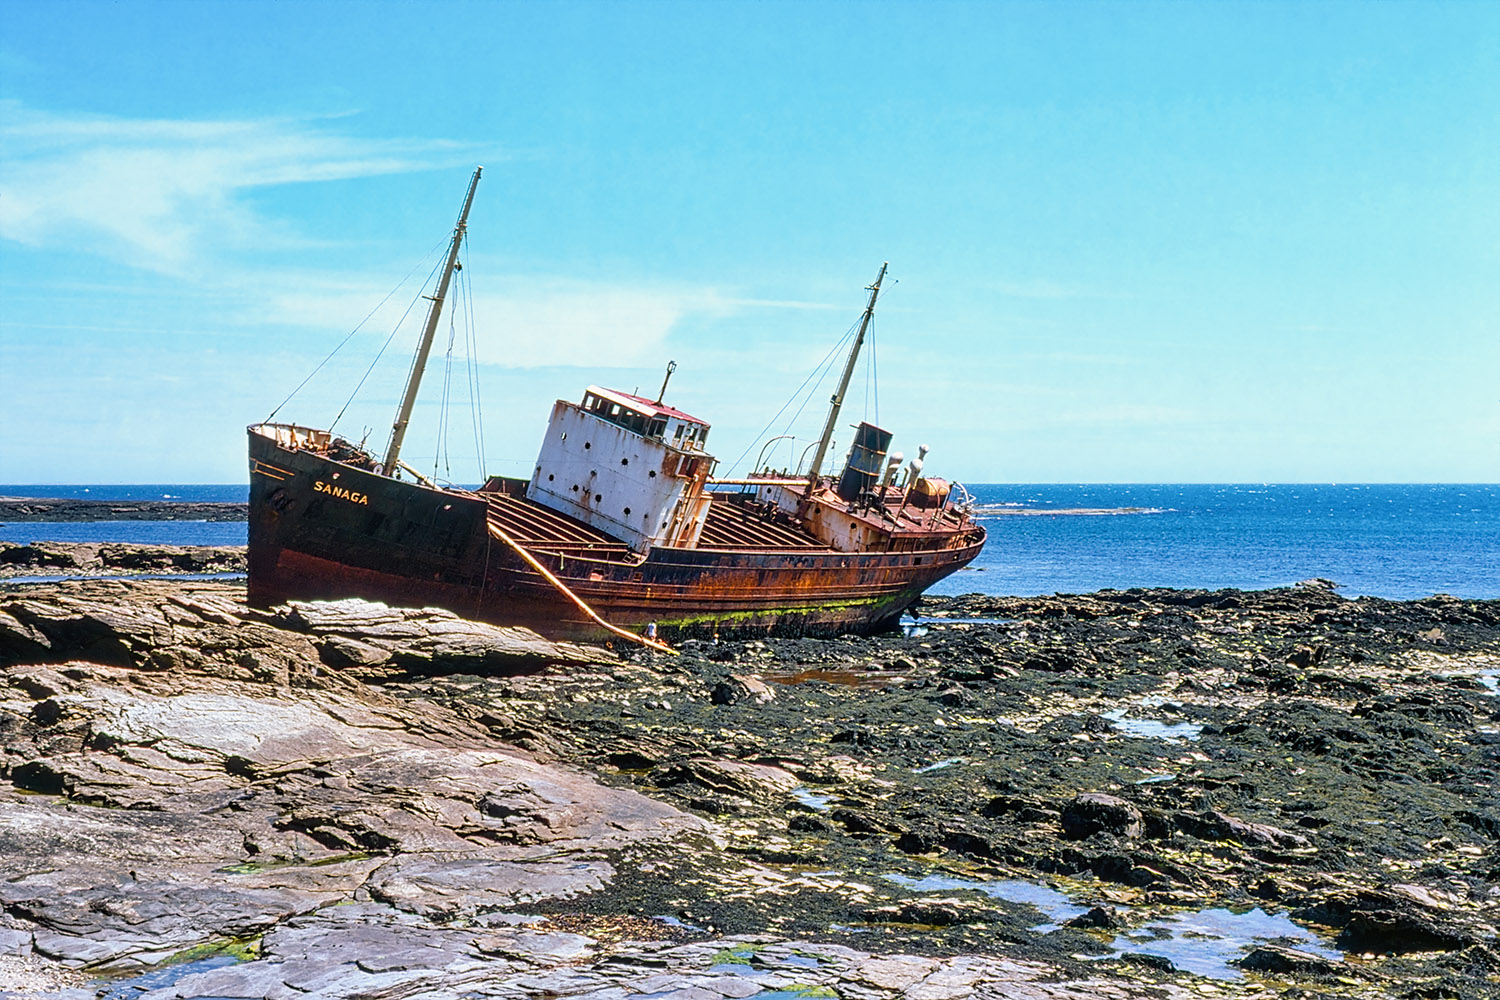 The cargo ship Sanaga ran aground near Locmaria on March 28, 1971